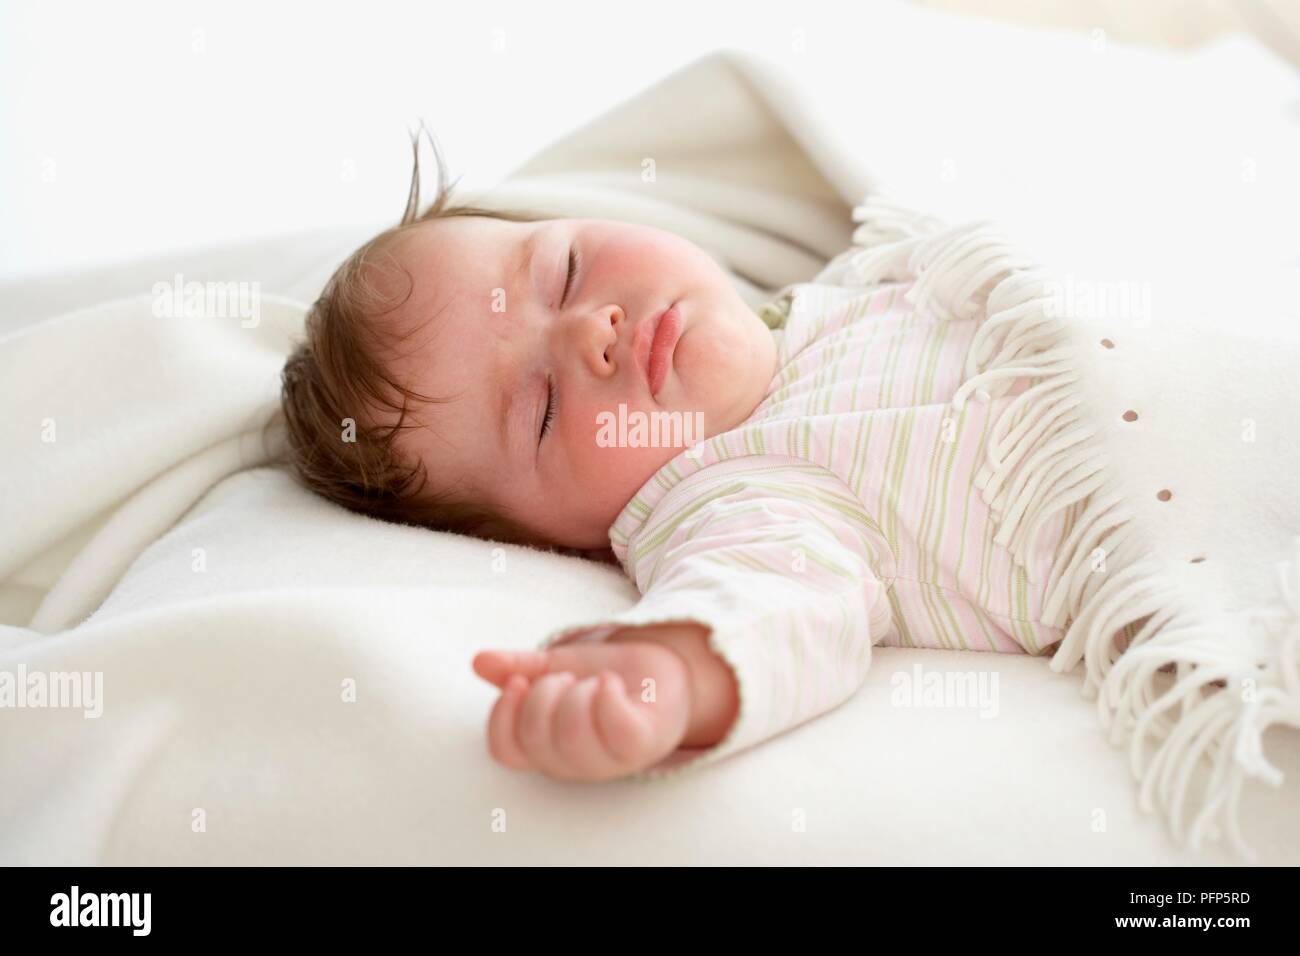 Baby girl asleep covered with blanket Stock Photo